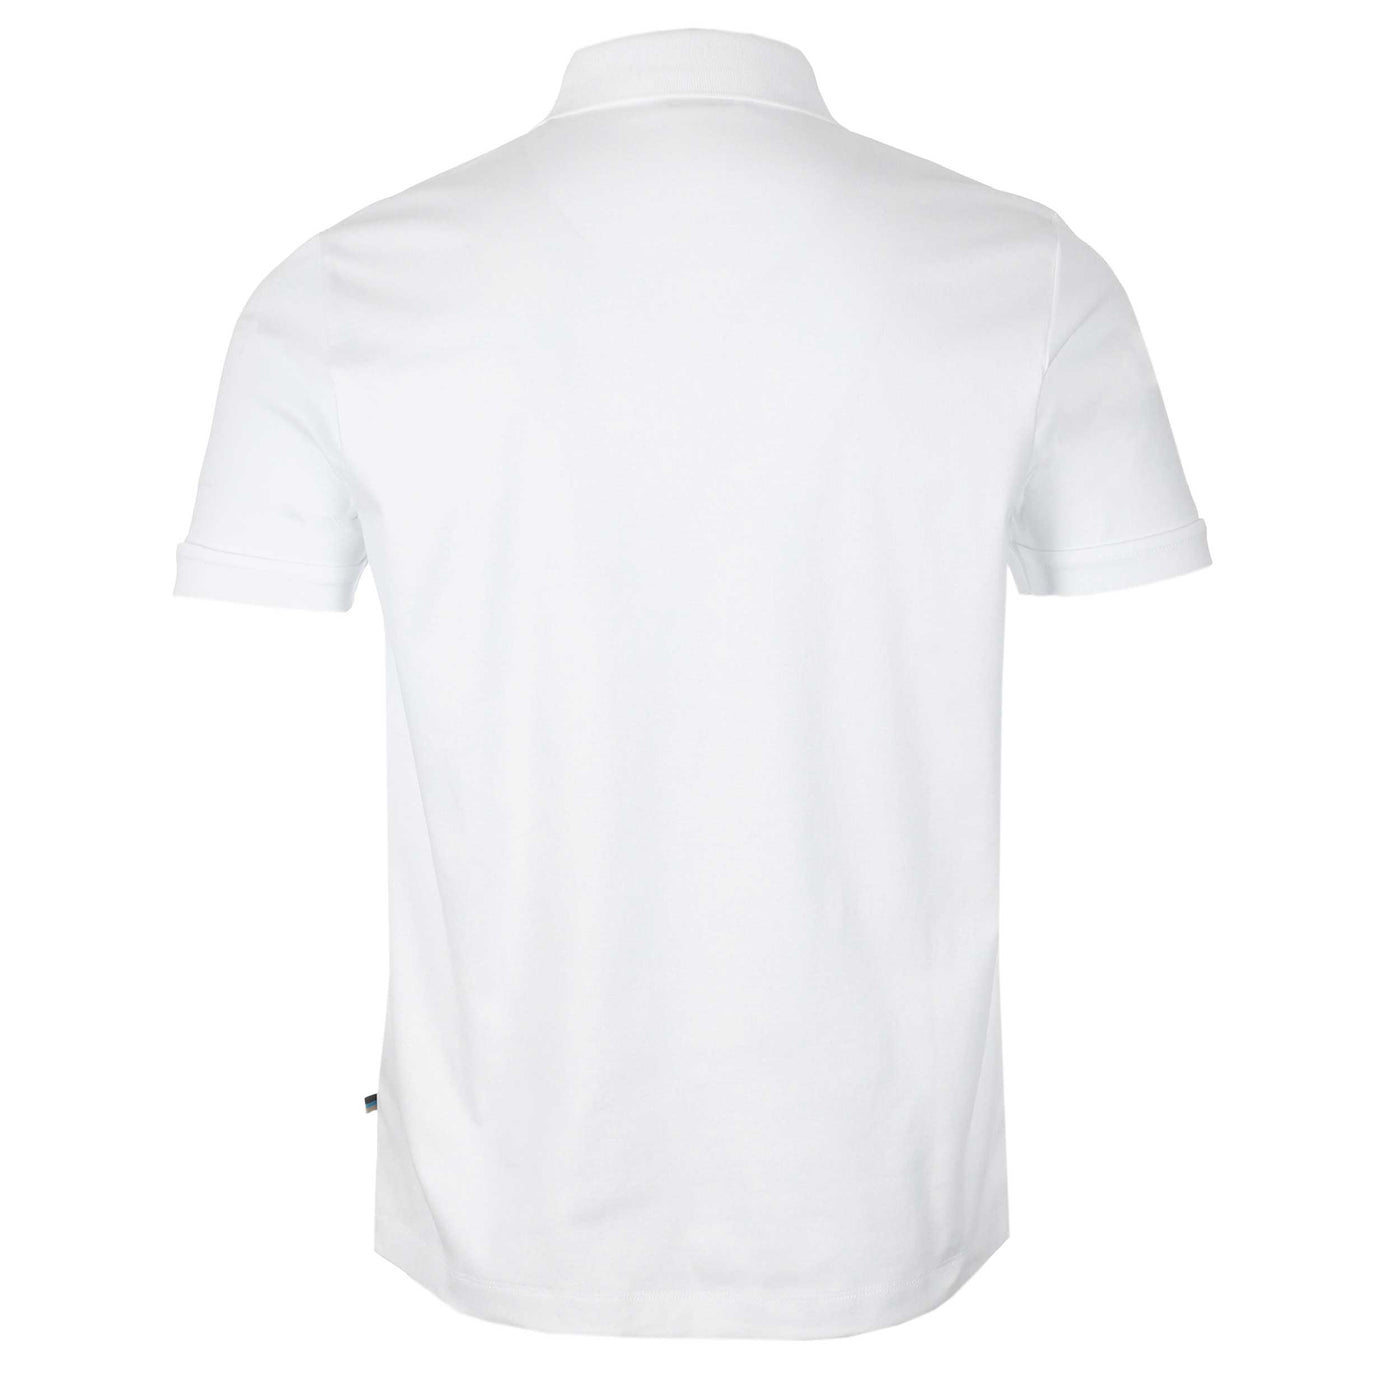 Sandbanks Interlock Full Button Polo Shirt in White Back